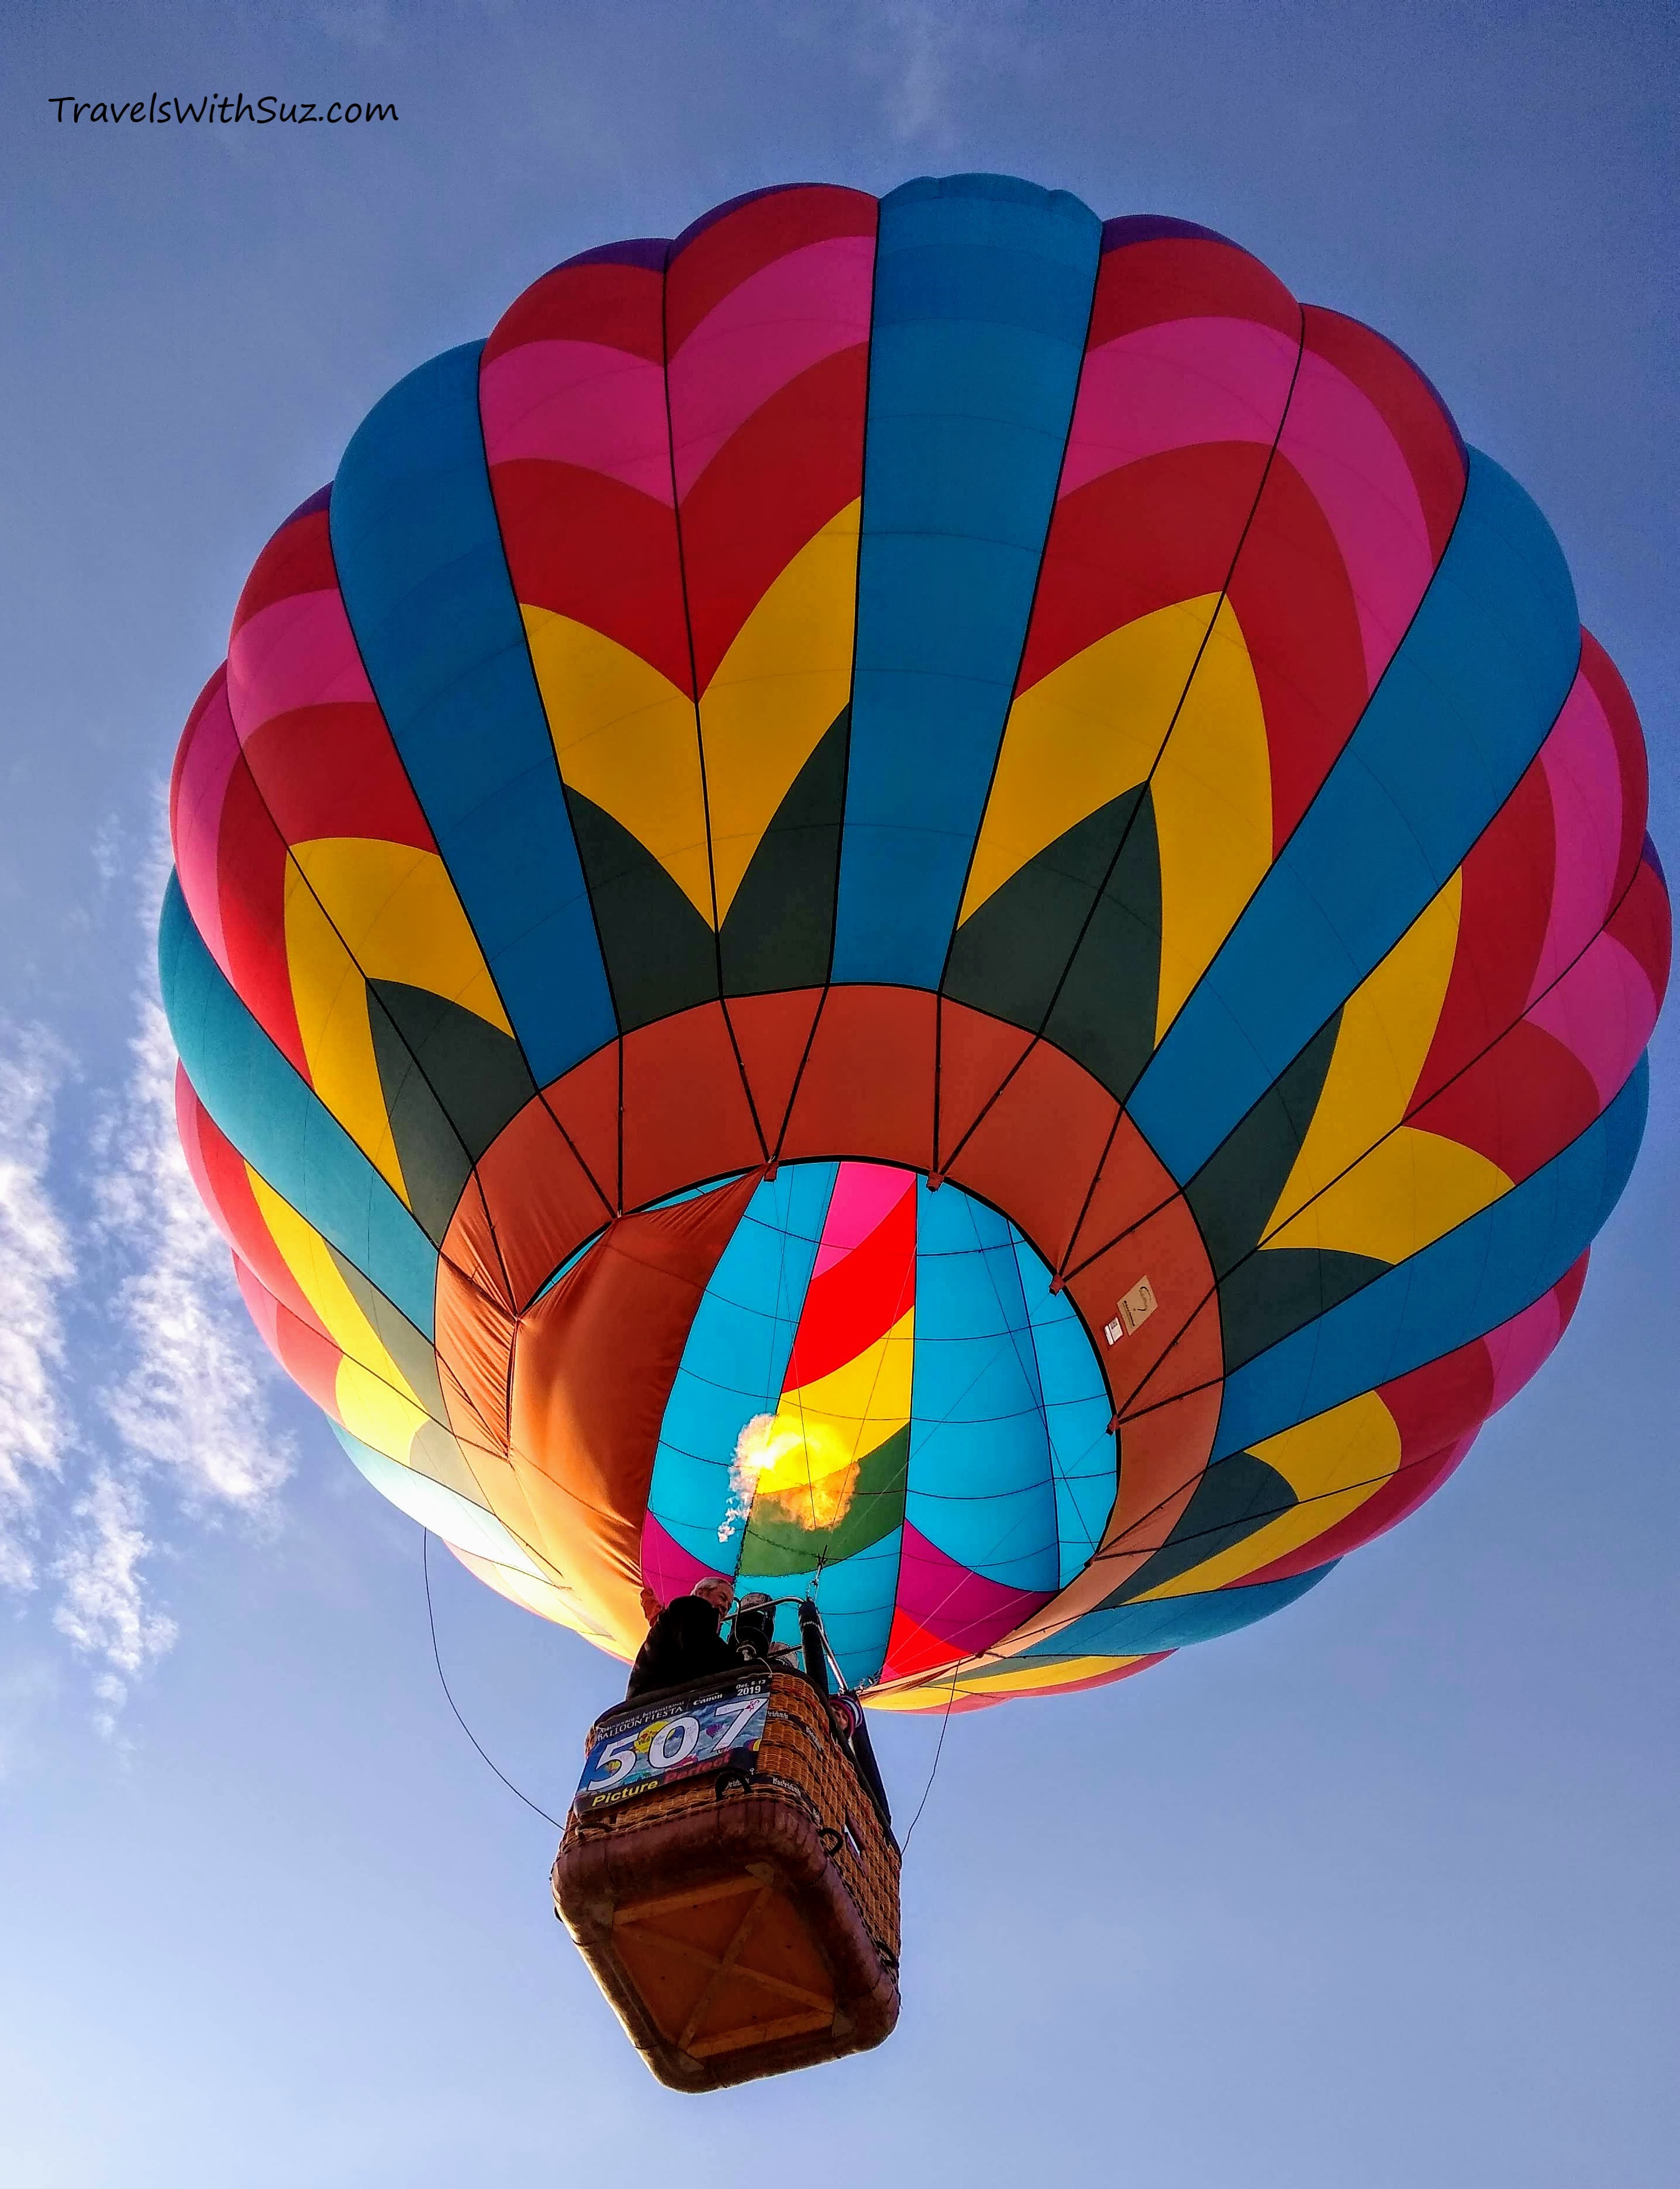 Seeking Nirvana aloft - Albuquerque International Balloon Fiesta - TravelsWithSuz.com